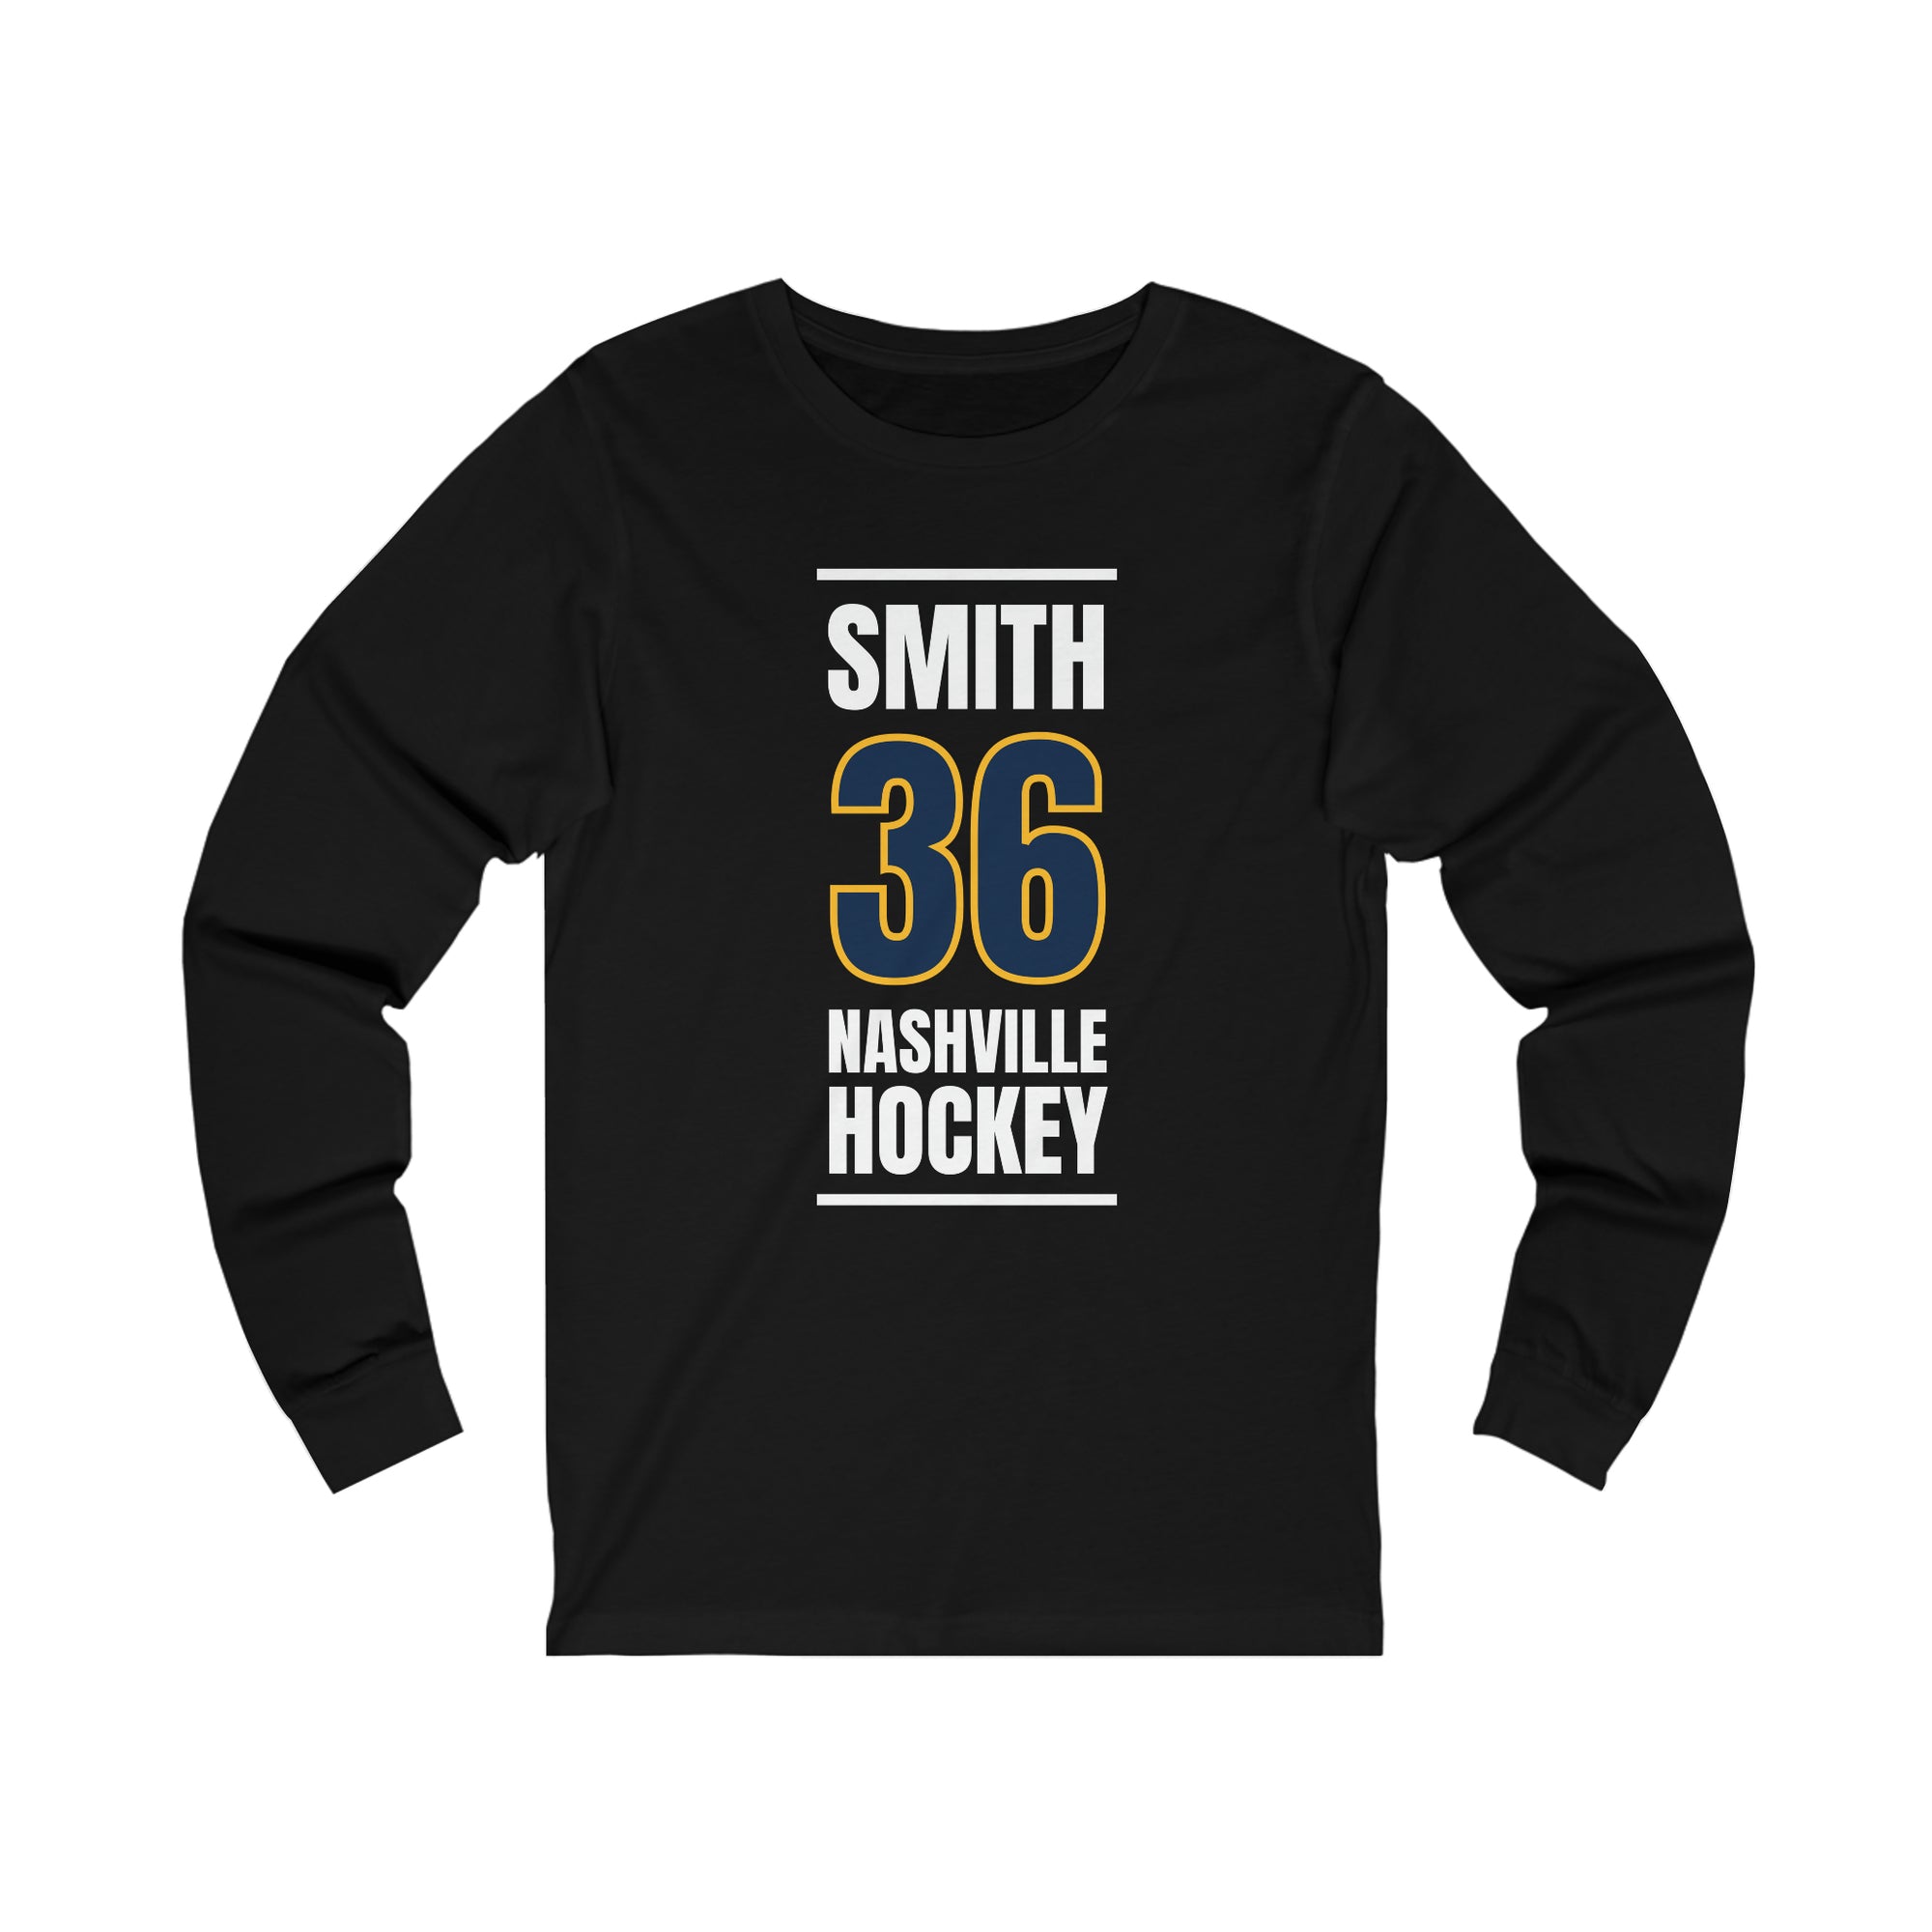 Smith 36 Nashville Hockey Navy Blue Vertical Design Unisex Jersey Long Sleeve Shirt